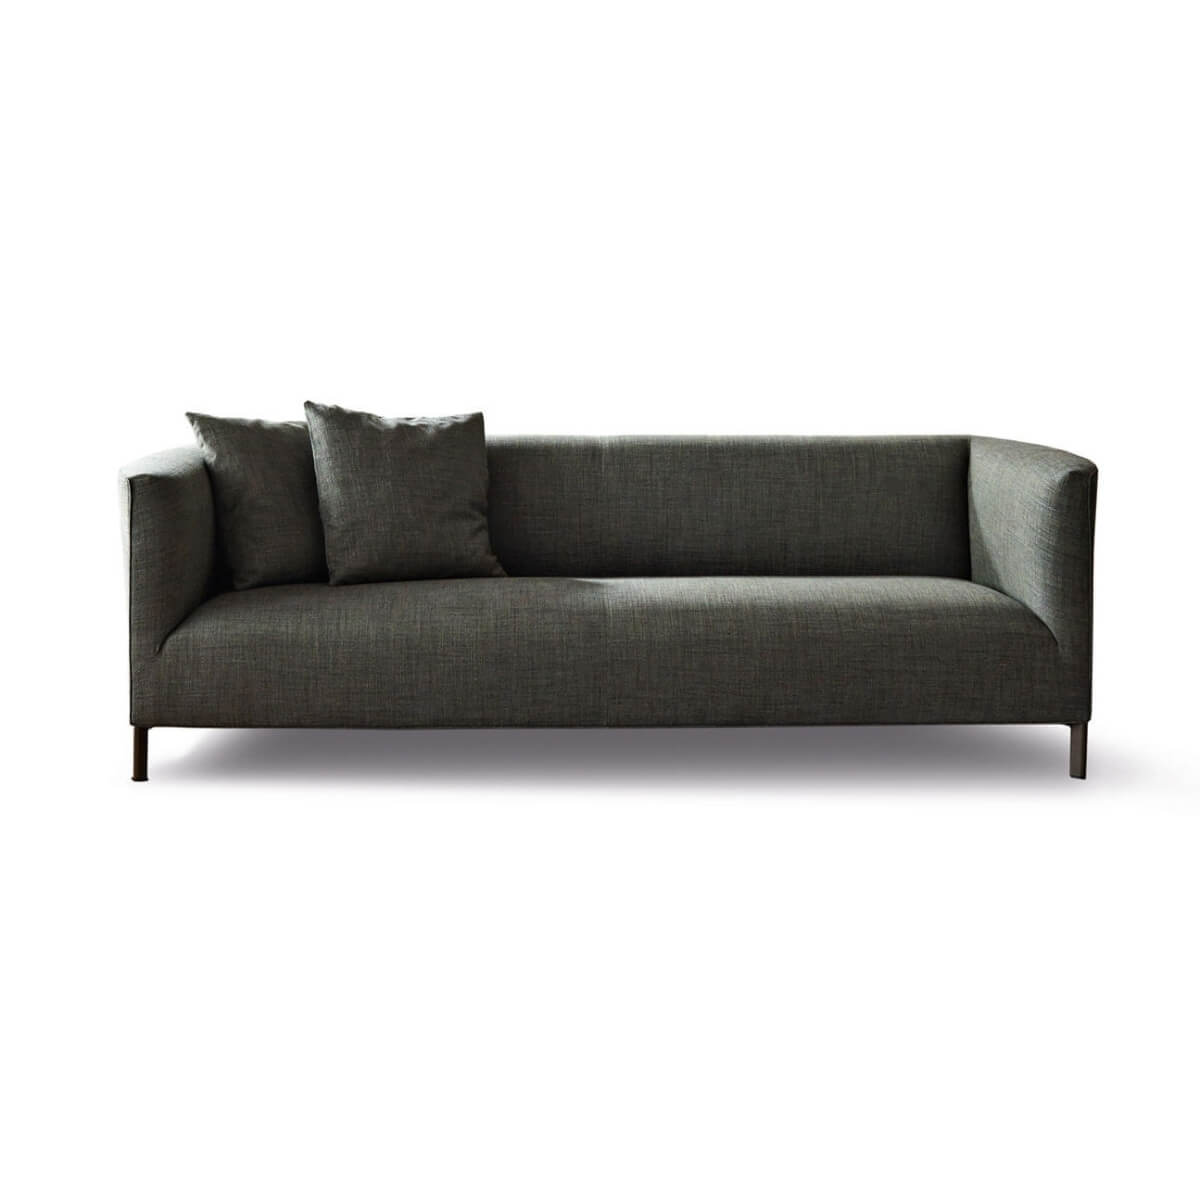 Aurora Alcove Cotton Linen Sofa: A Dreamy Oasis of Comfort